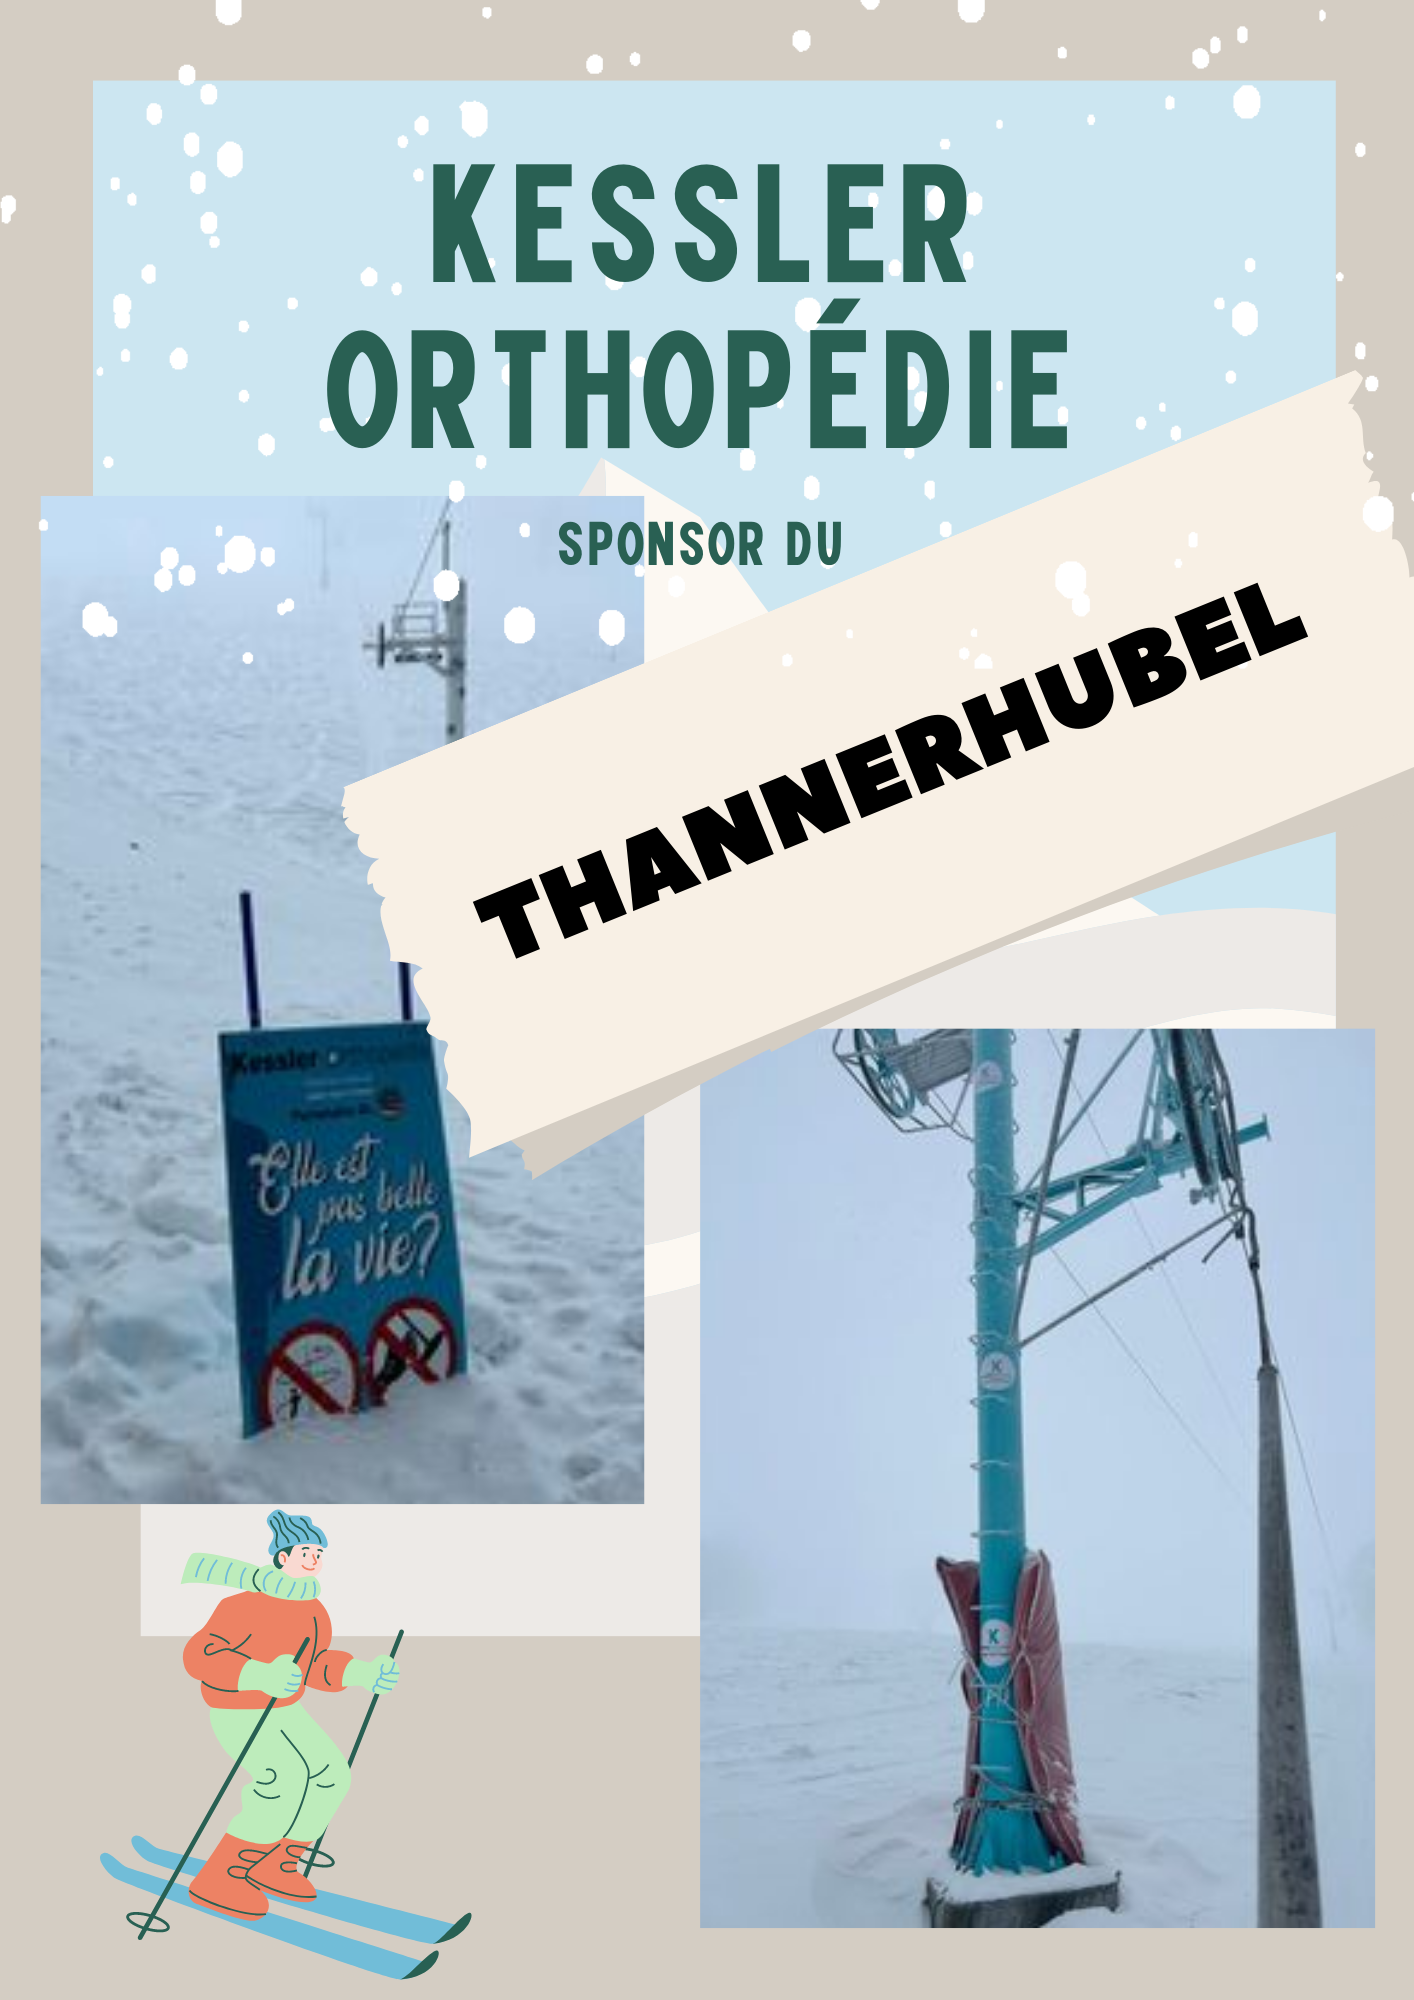 Kessler Orthopédie sponsorise le Thannerhubel